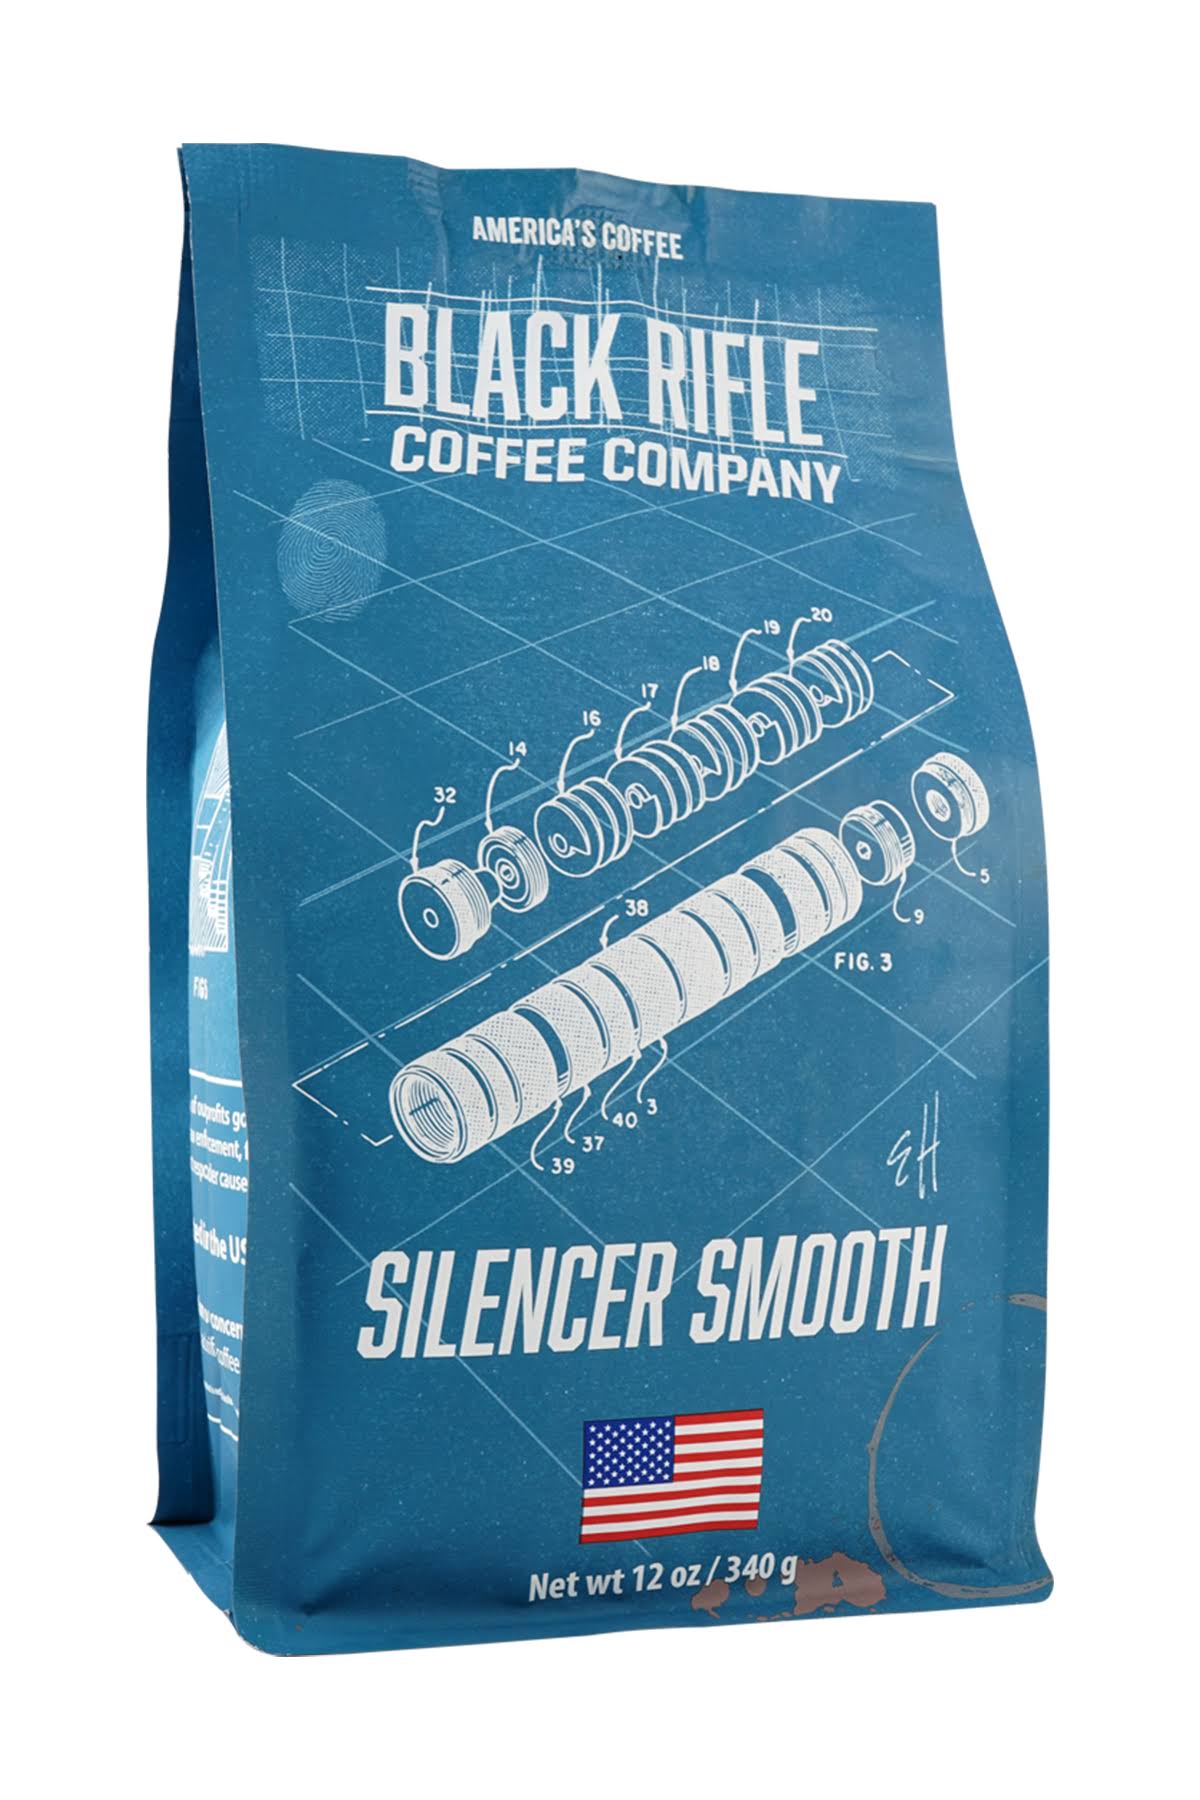 BRCC Coffee Club - Whole Bean SILENCER Smooth / 2 Bags | Black Rifle Coffee Company